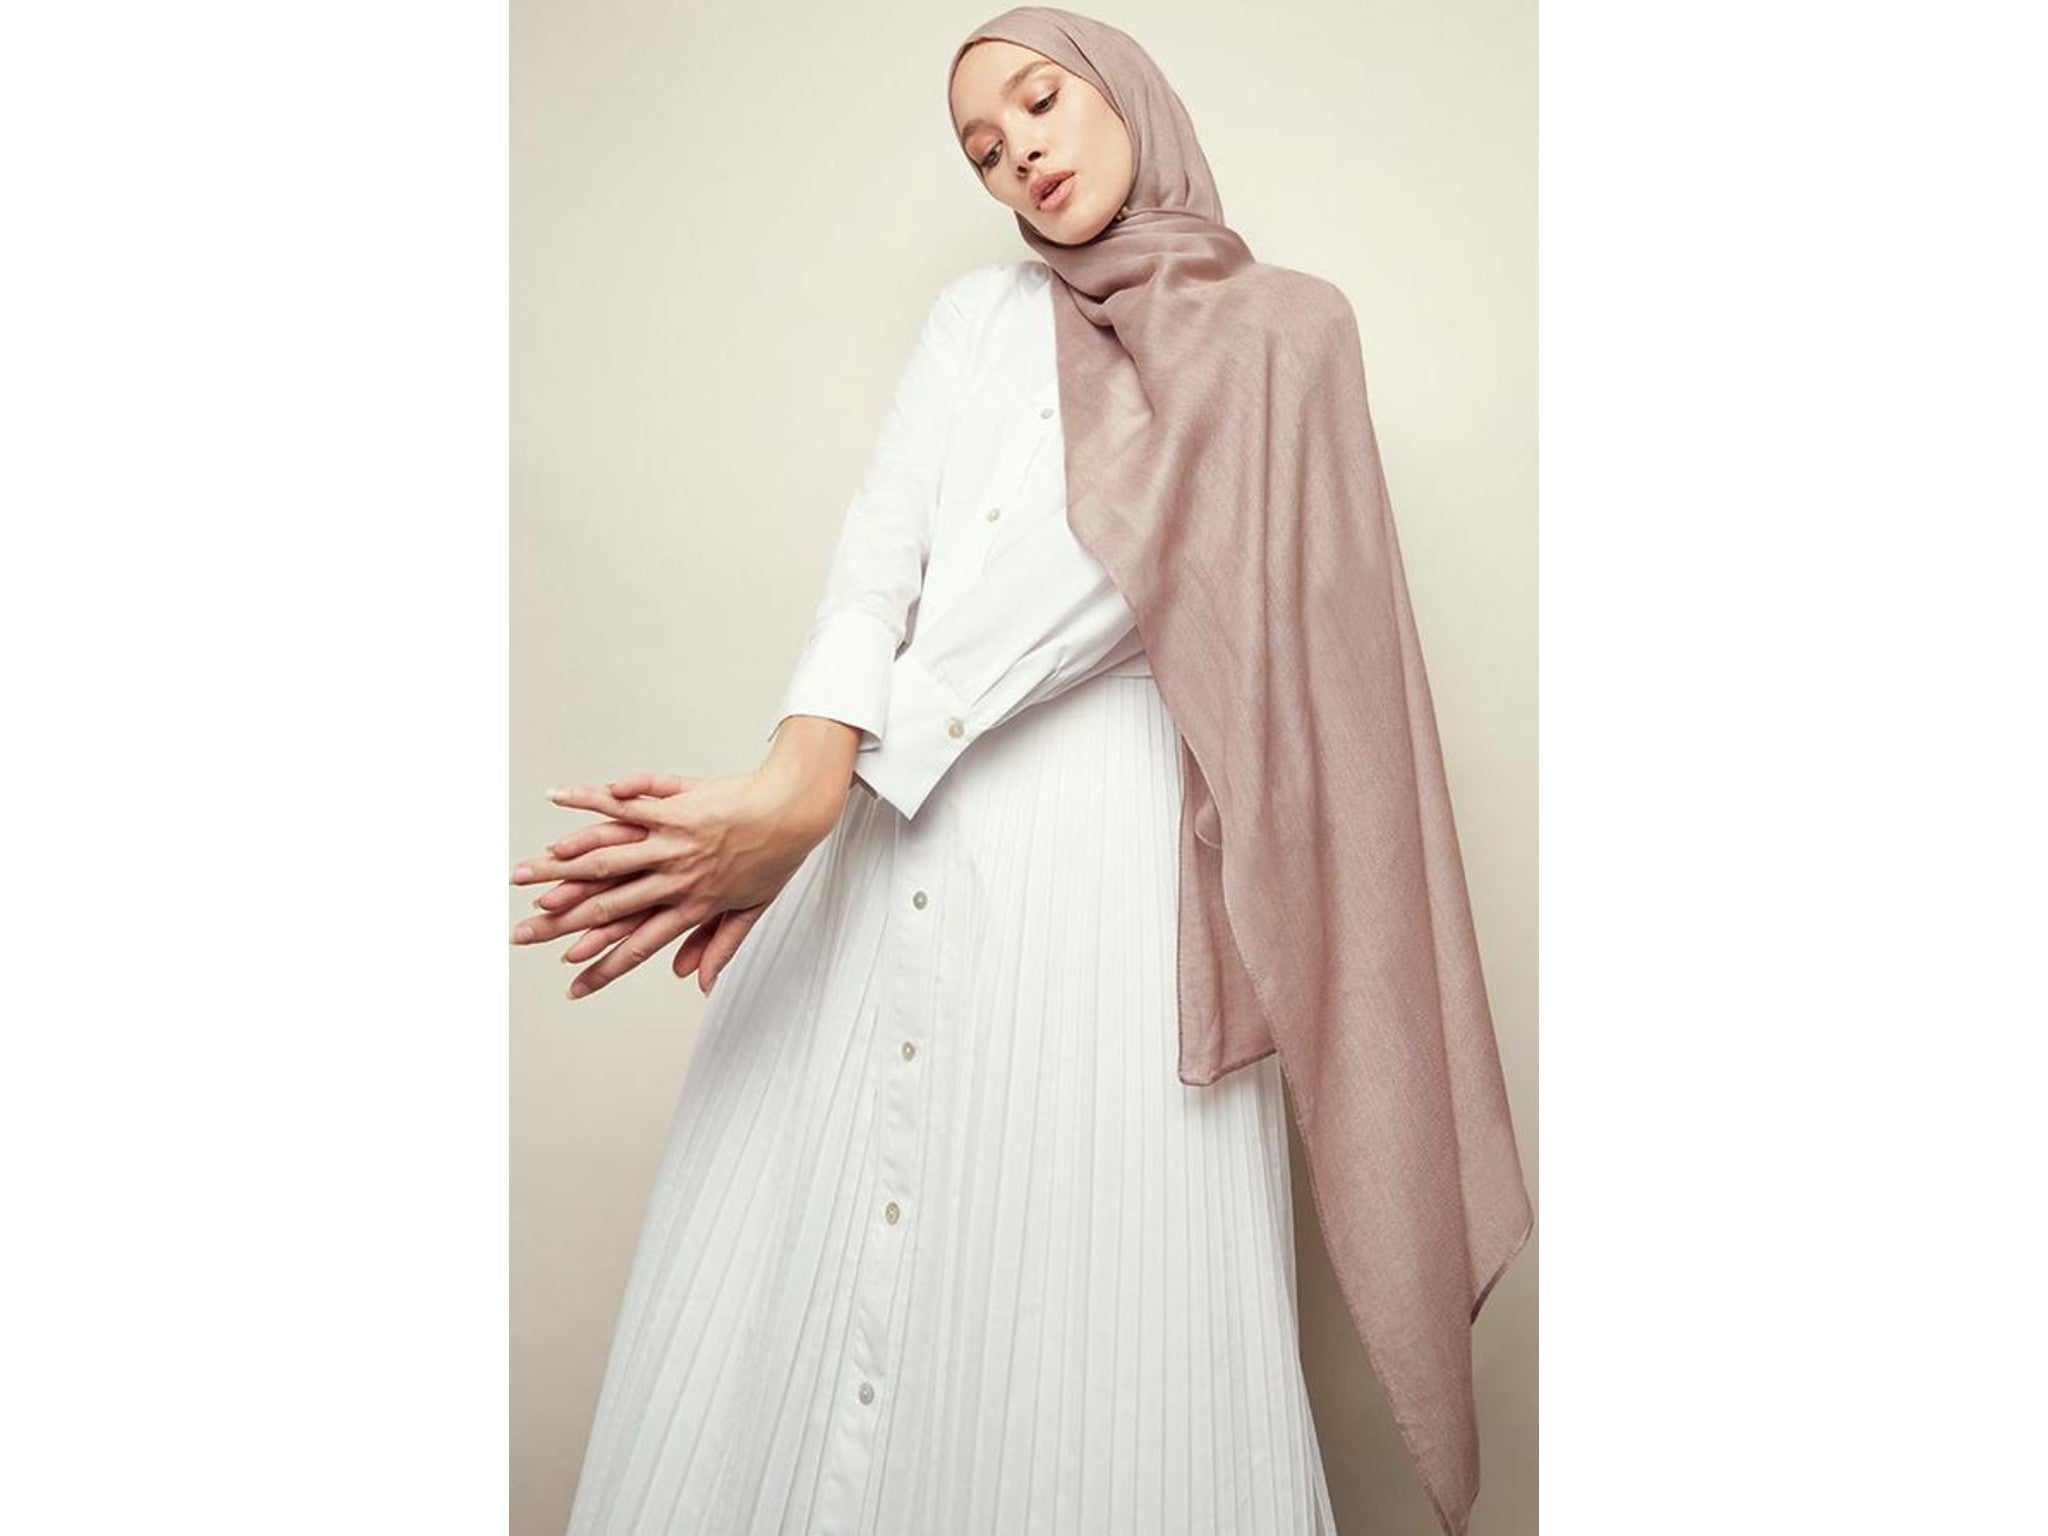 Silq Rose grey mauve fine weave model hijab indybest.jpeg